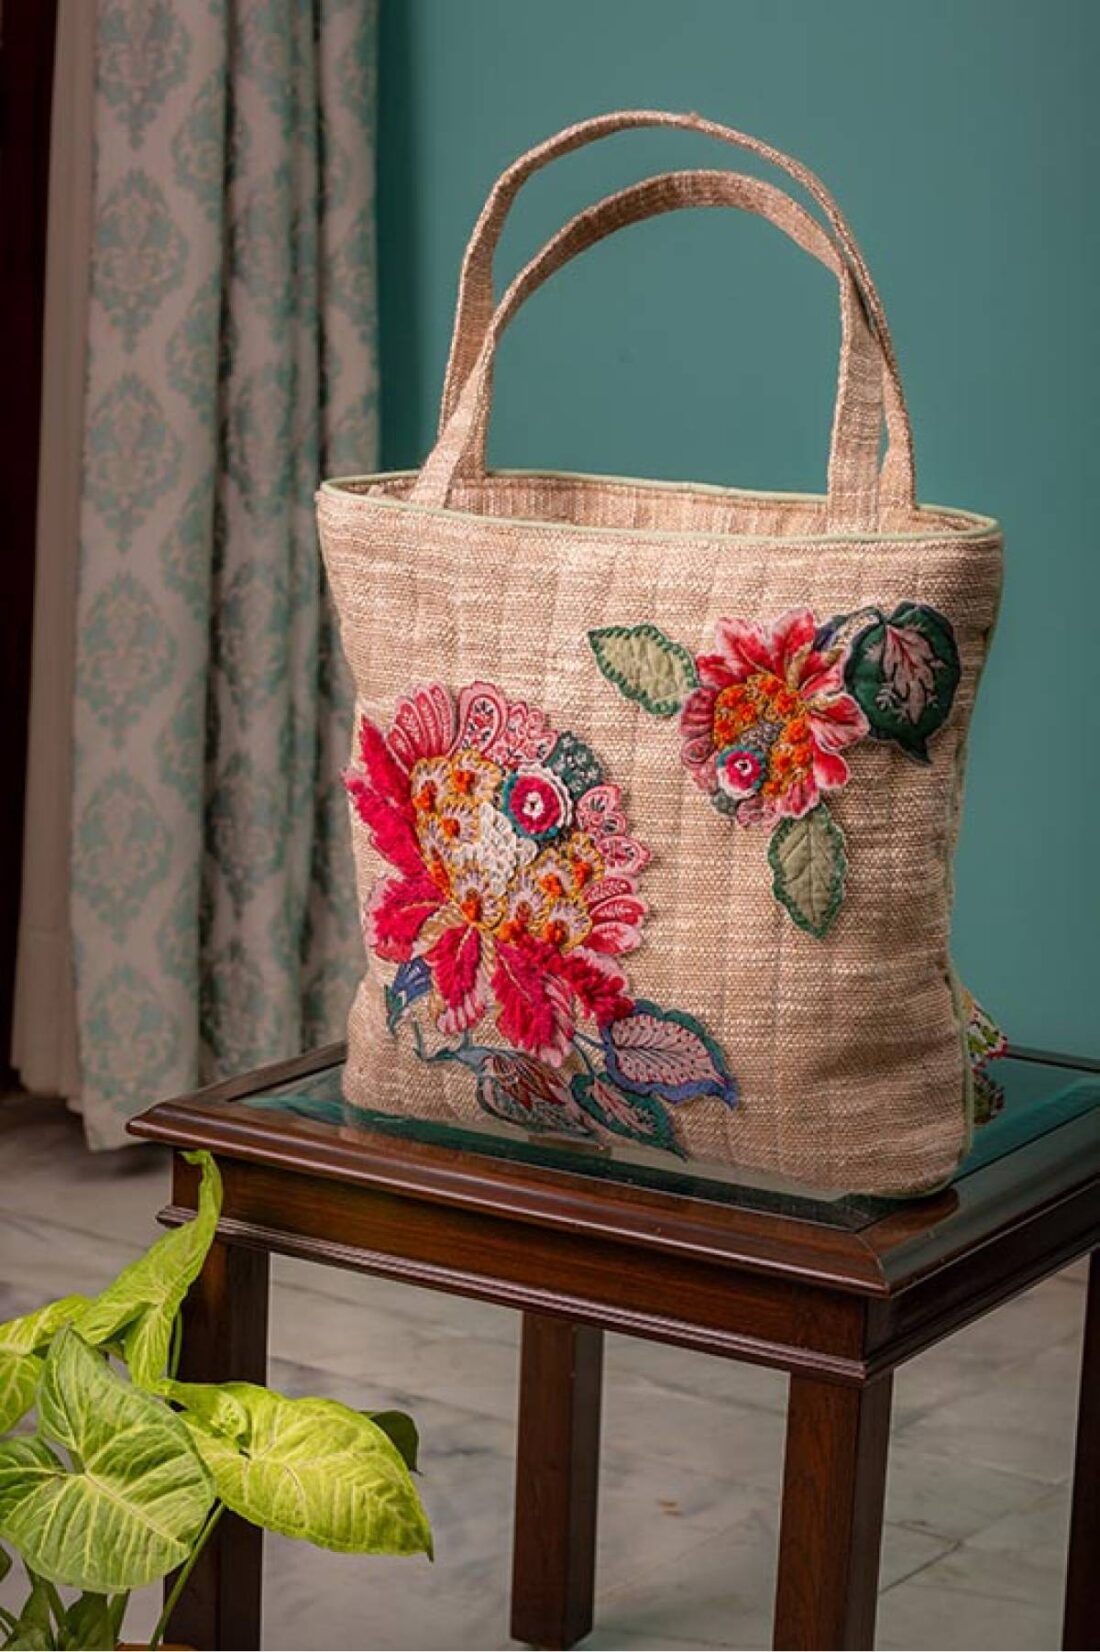 Ethnic floral tasseed bag